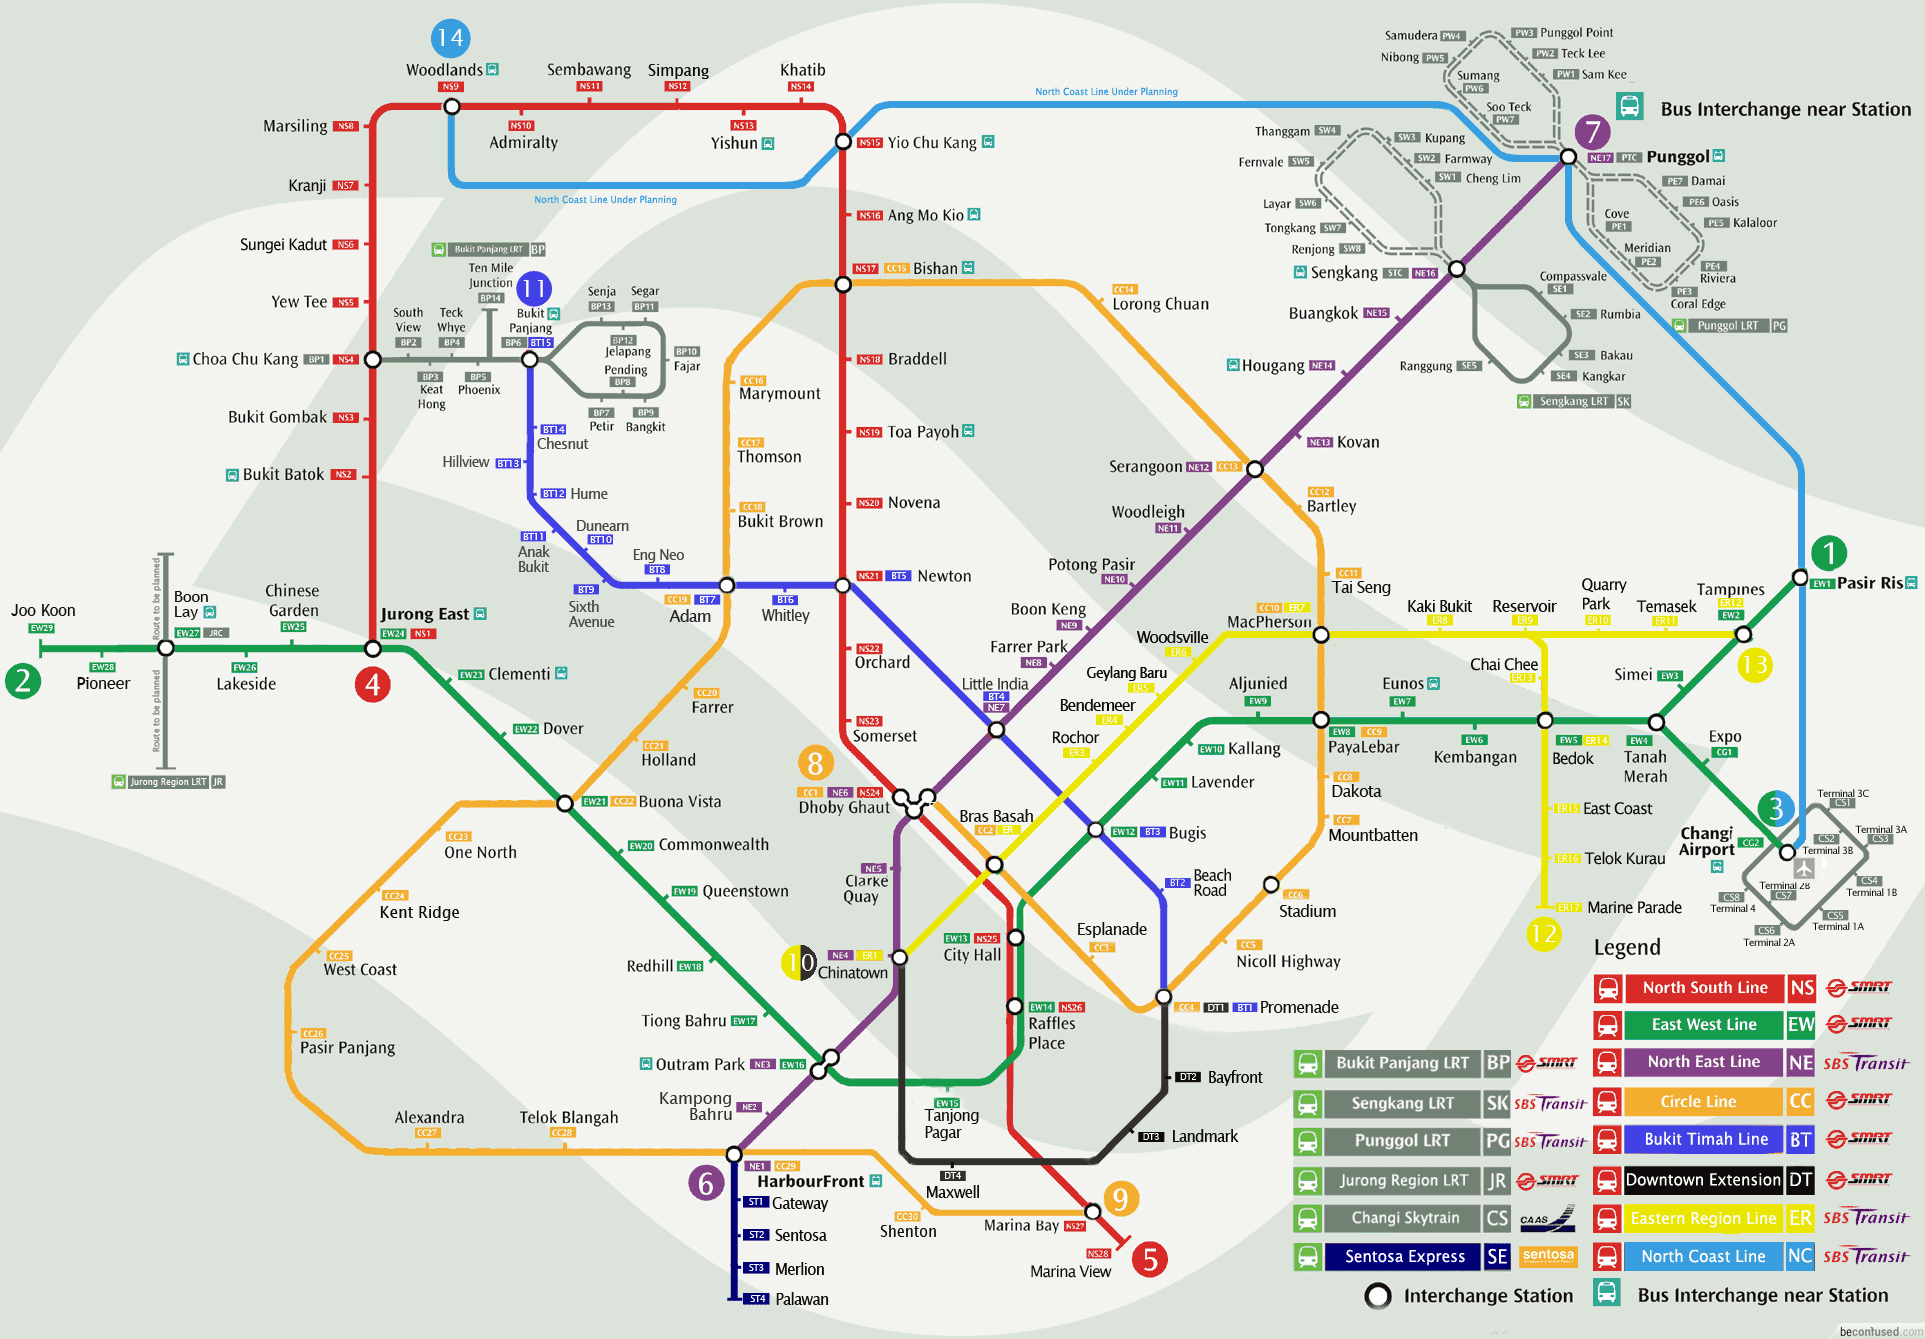 Singapore MRT & LRT train rail maps